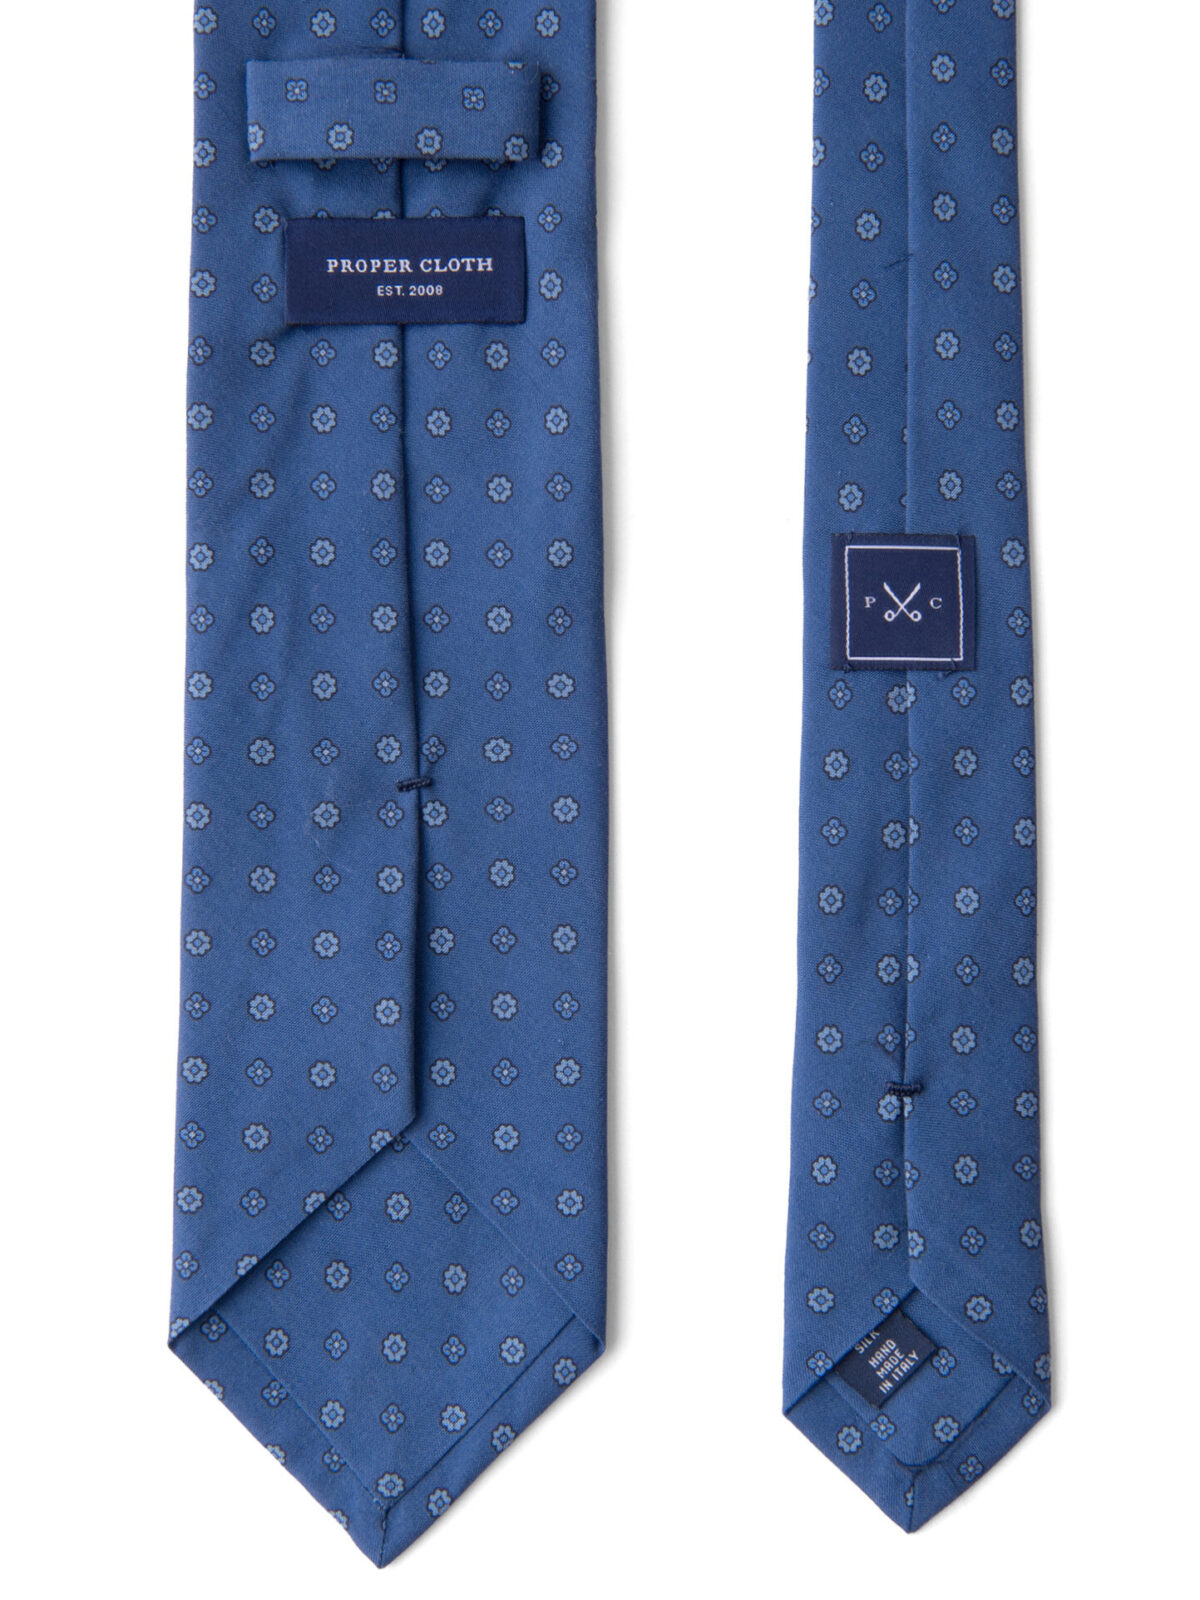 Ocean Blue Grey and Light Blue Small Foulard Print Tie